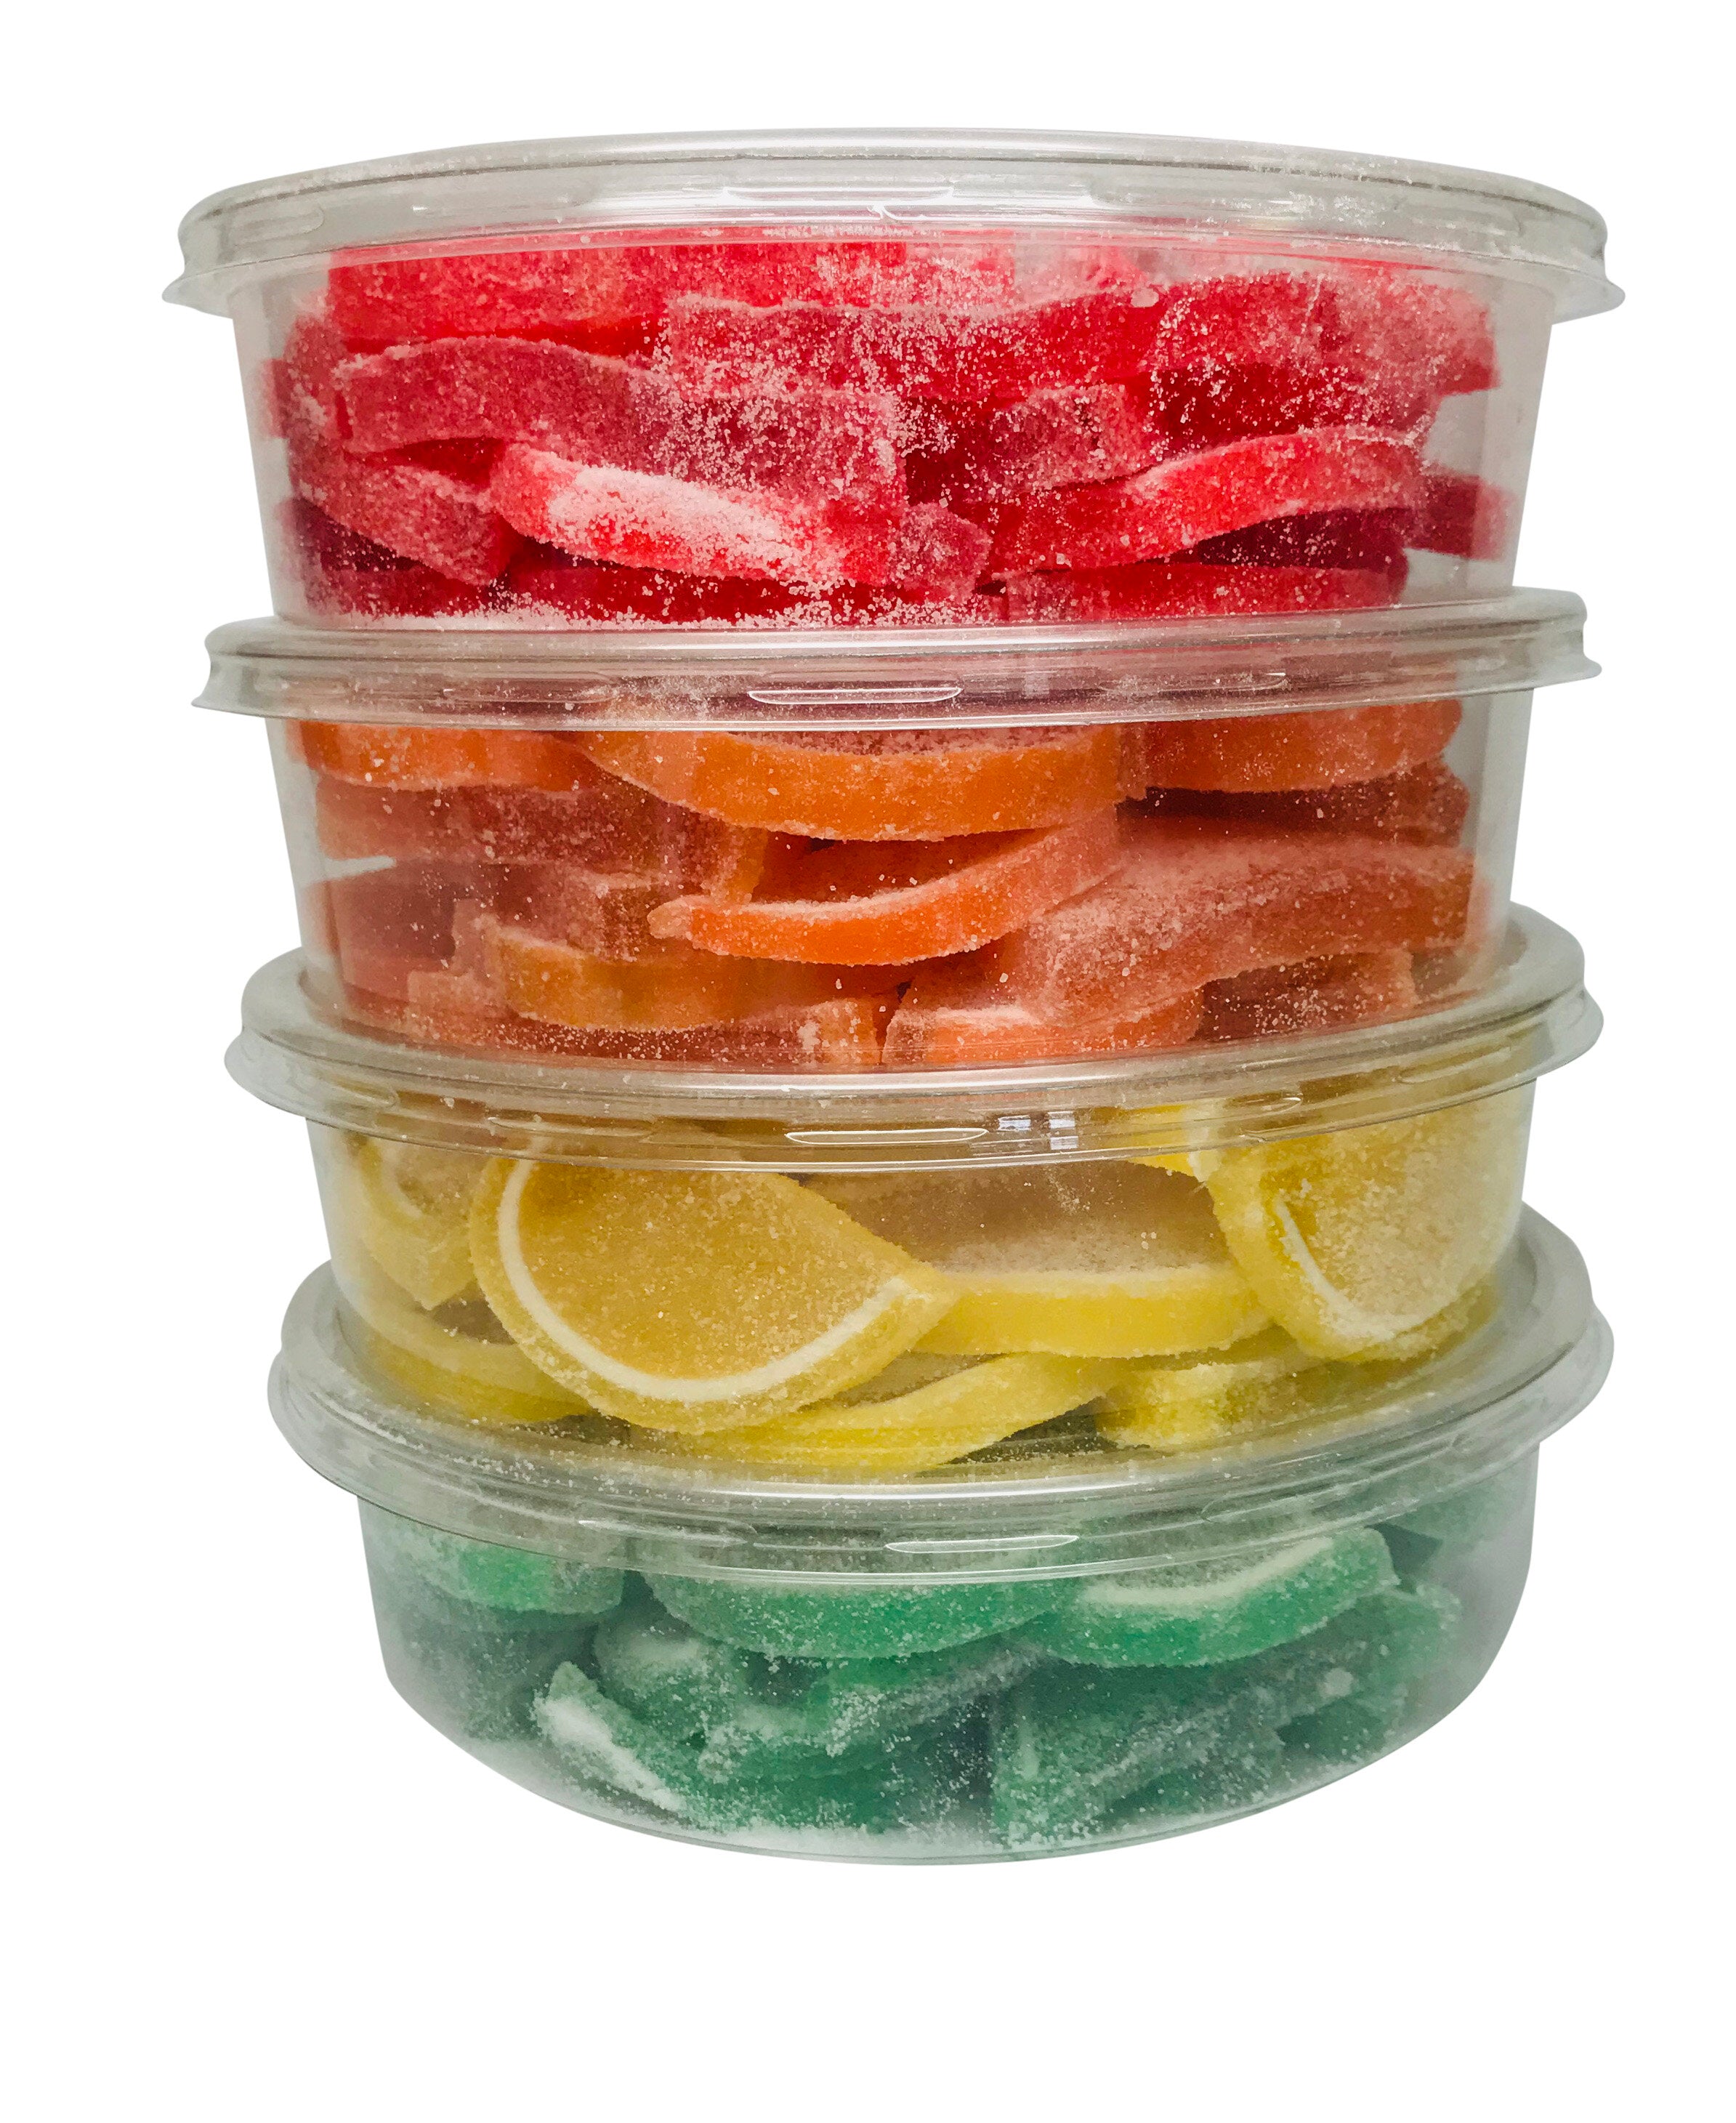 Boston Fruit Slices: Assorted Mini Fruit Slices, 6 oz Bag